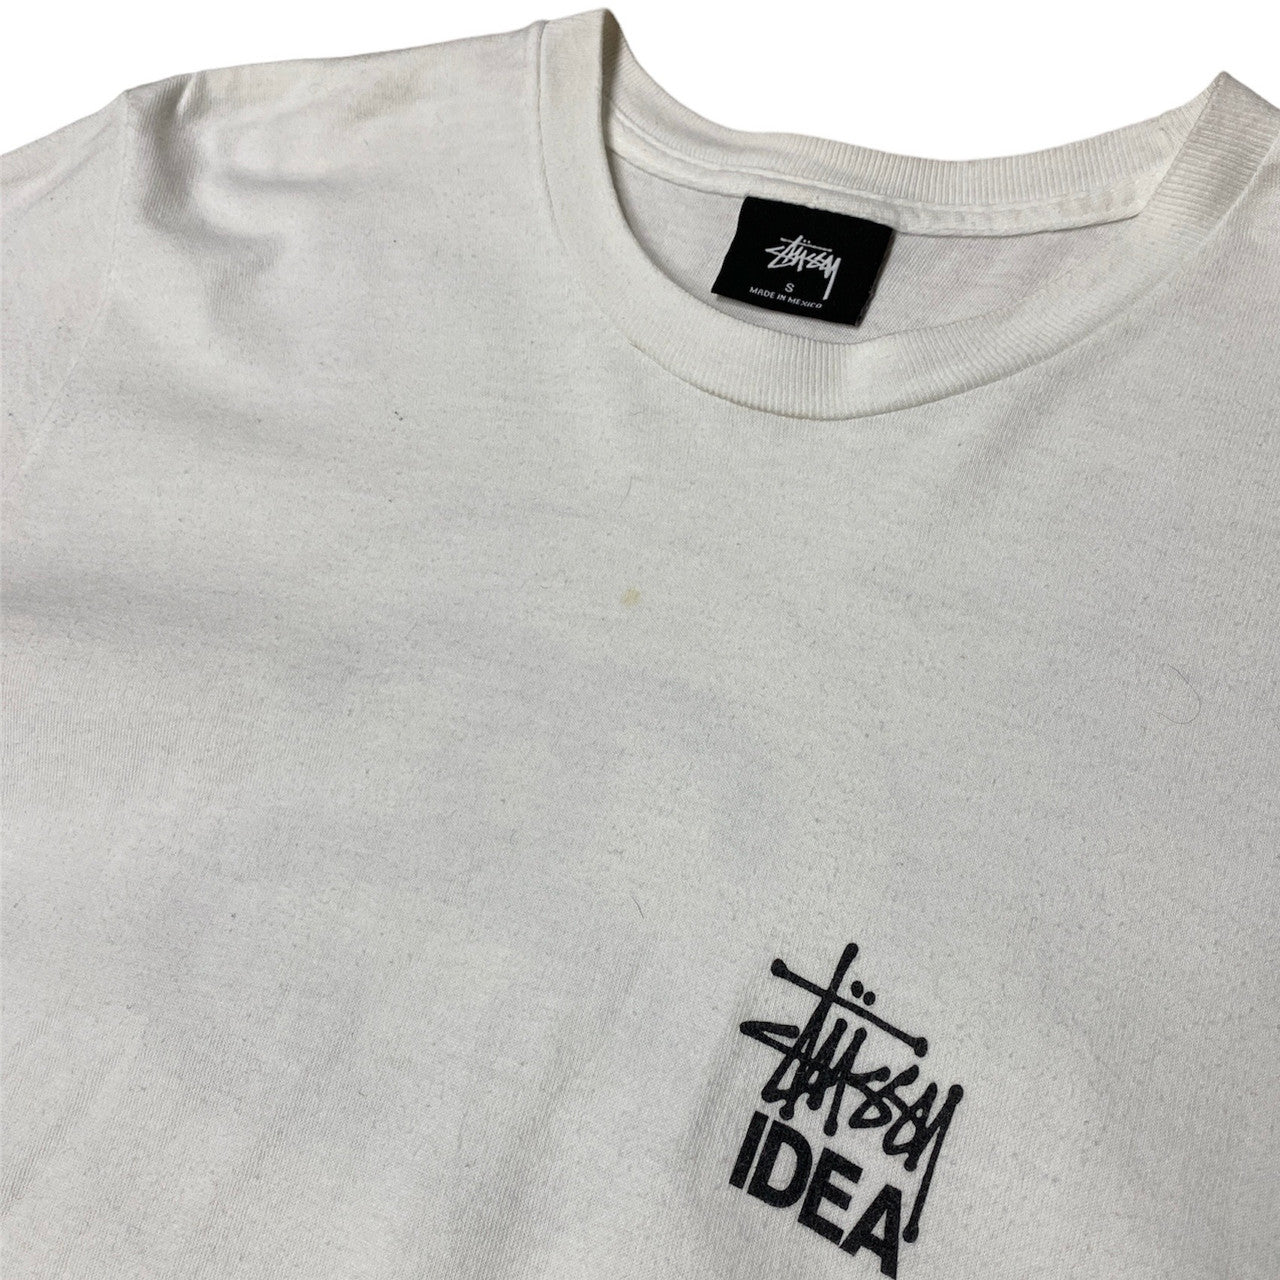 Stussy Idea White Tshirt